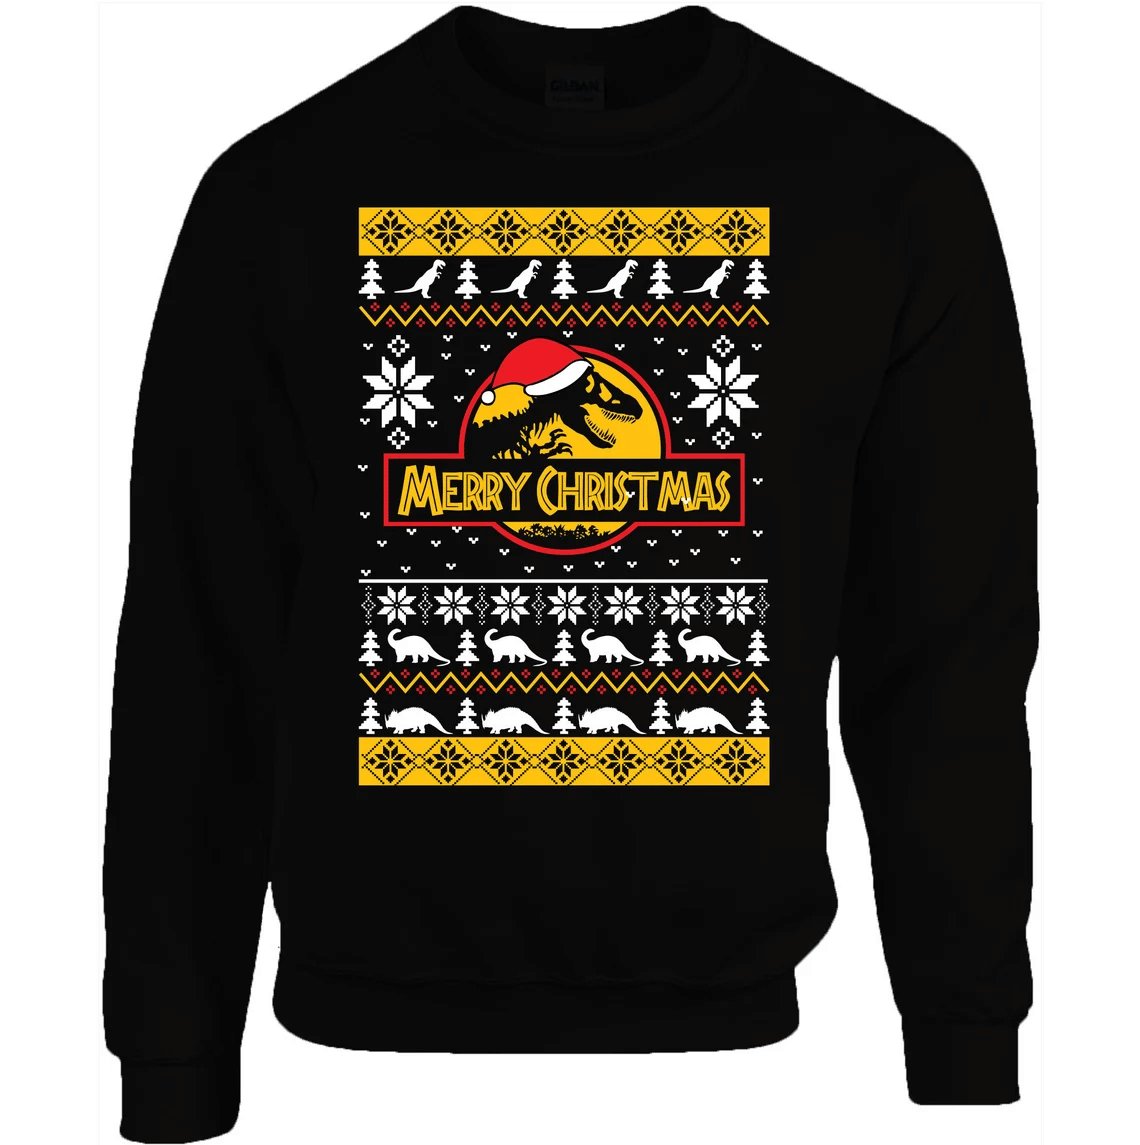 The World of Dinosaur Park Merry Christmas Sweatshirt Style: Sweatshirt, Color: Black